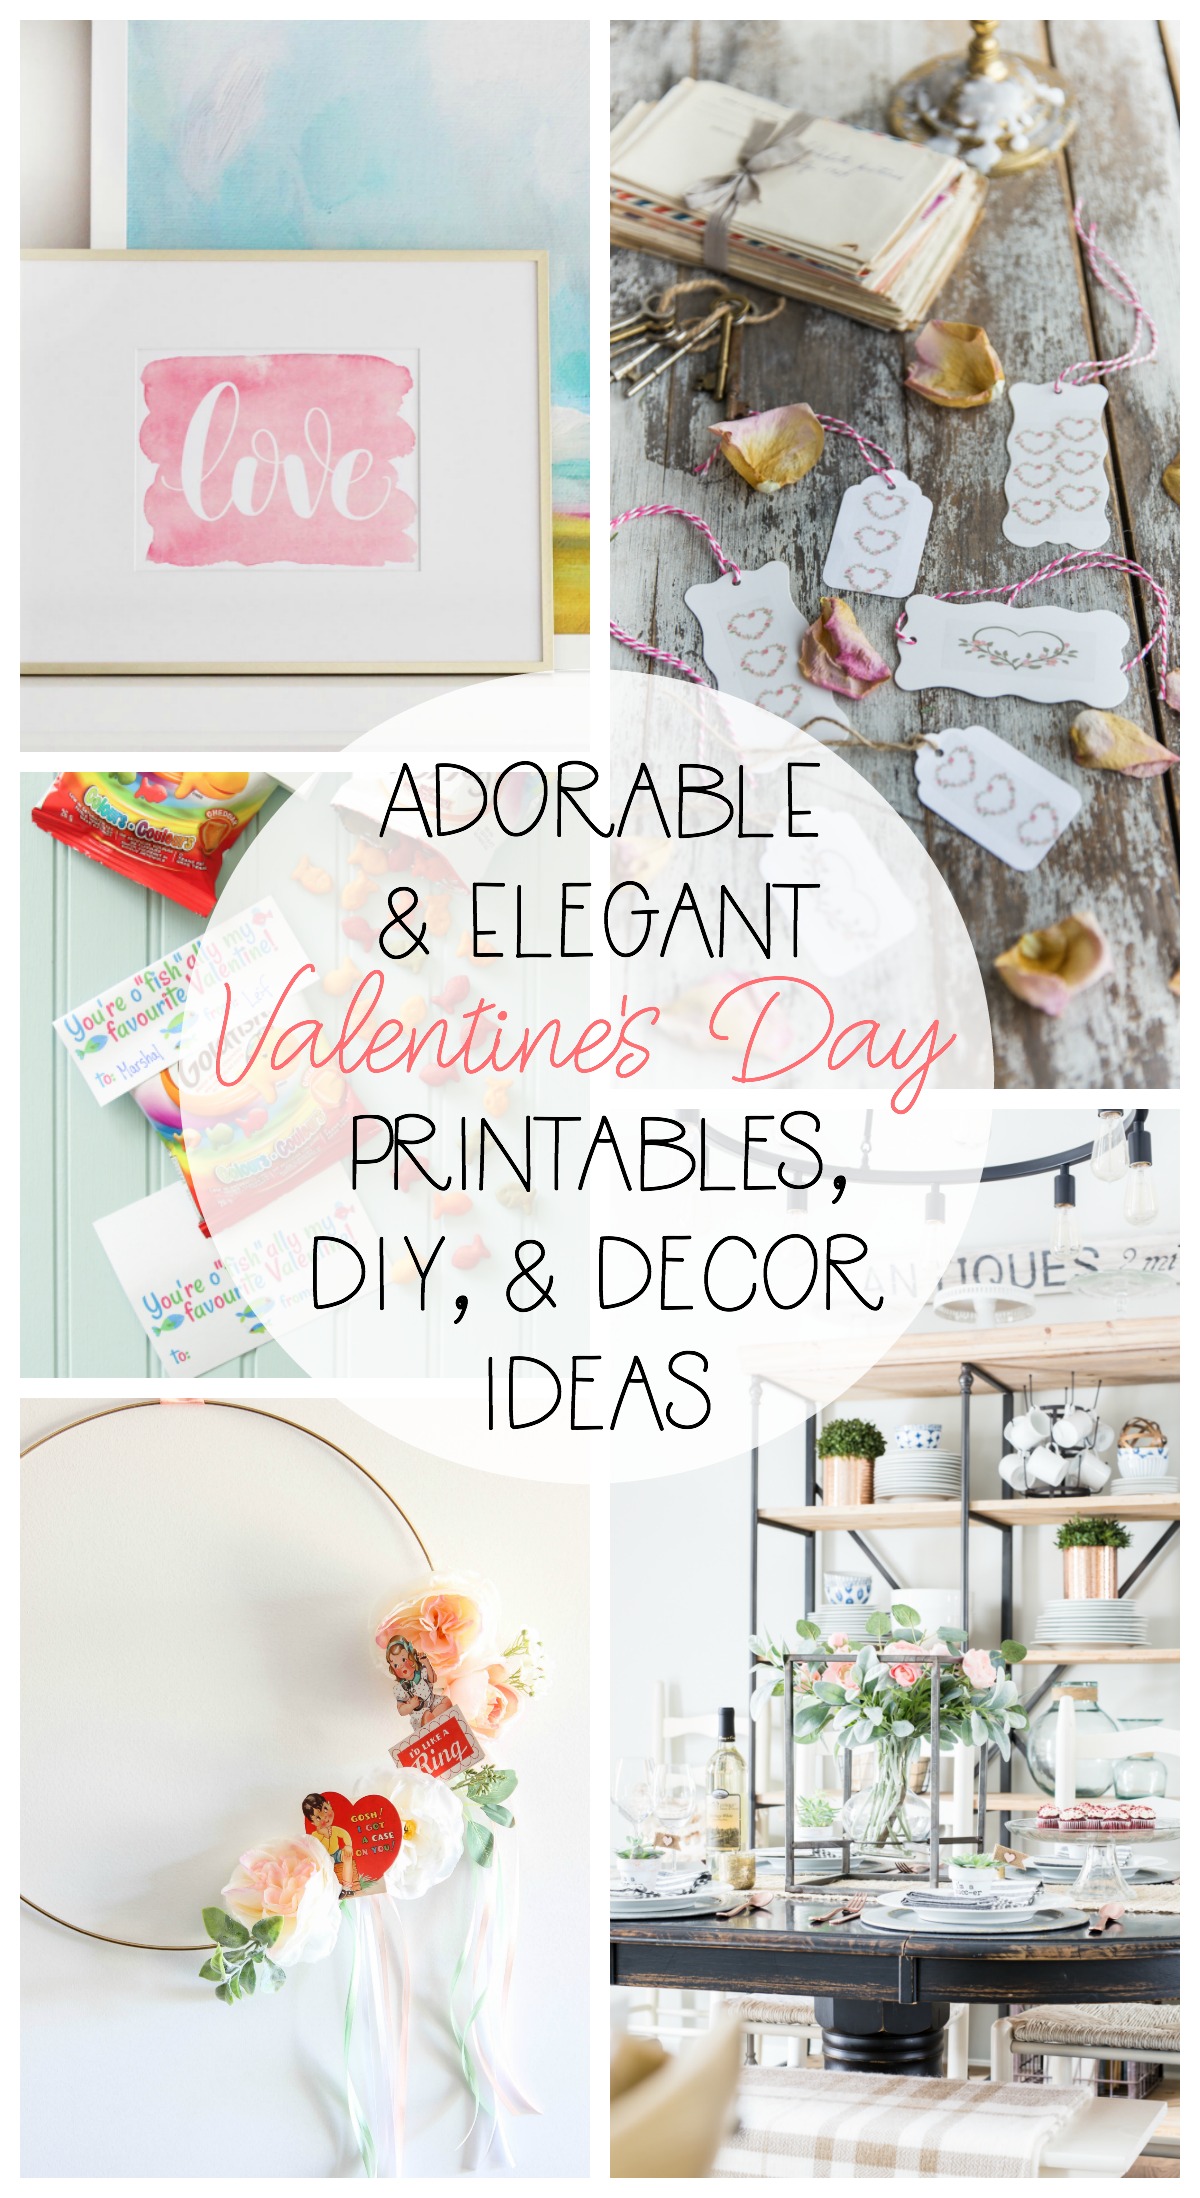 Adorable & Elegant Valentine's Day Printable DIY and Decor Ideas poster.